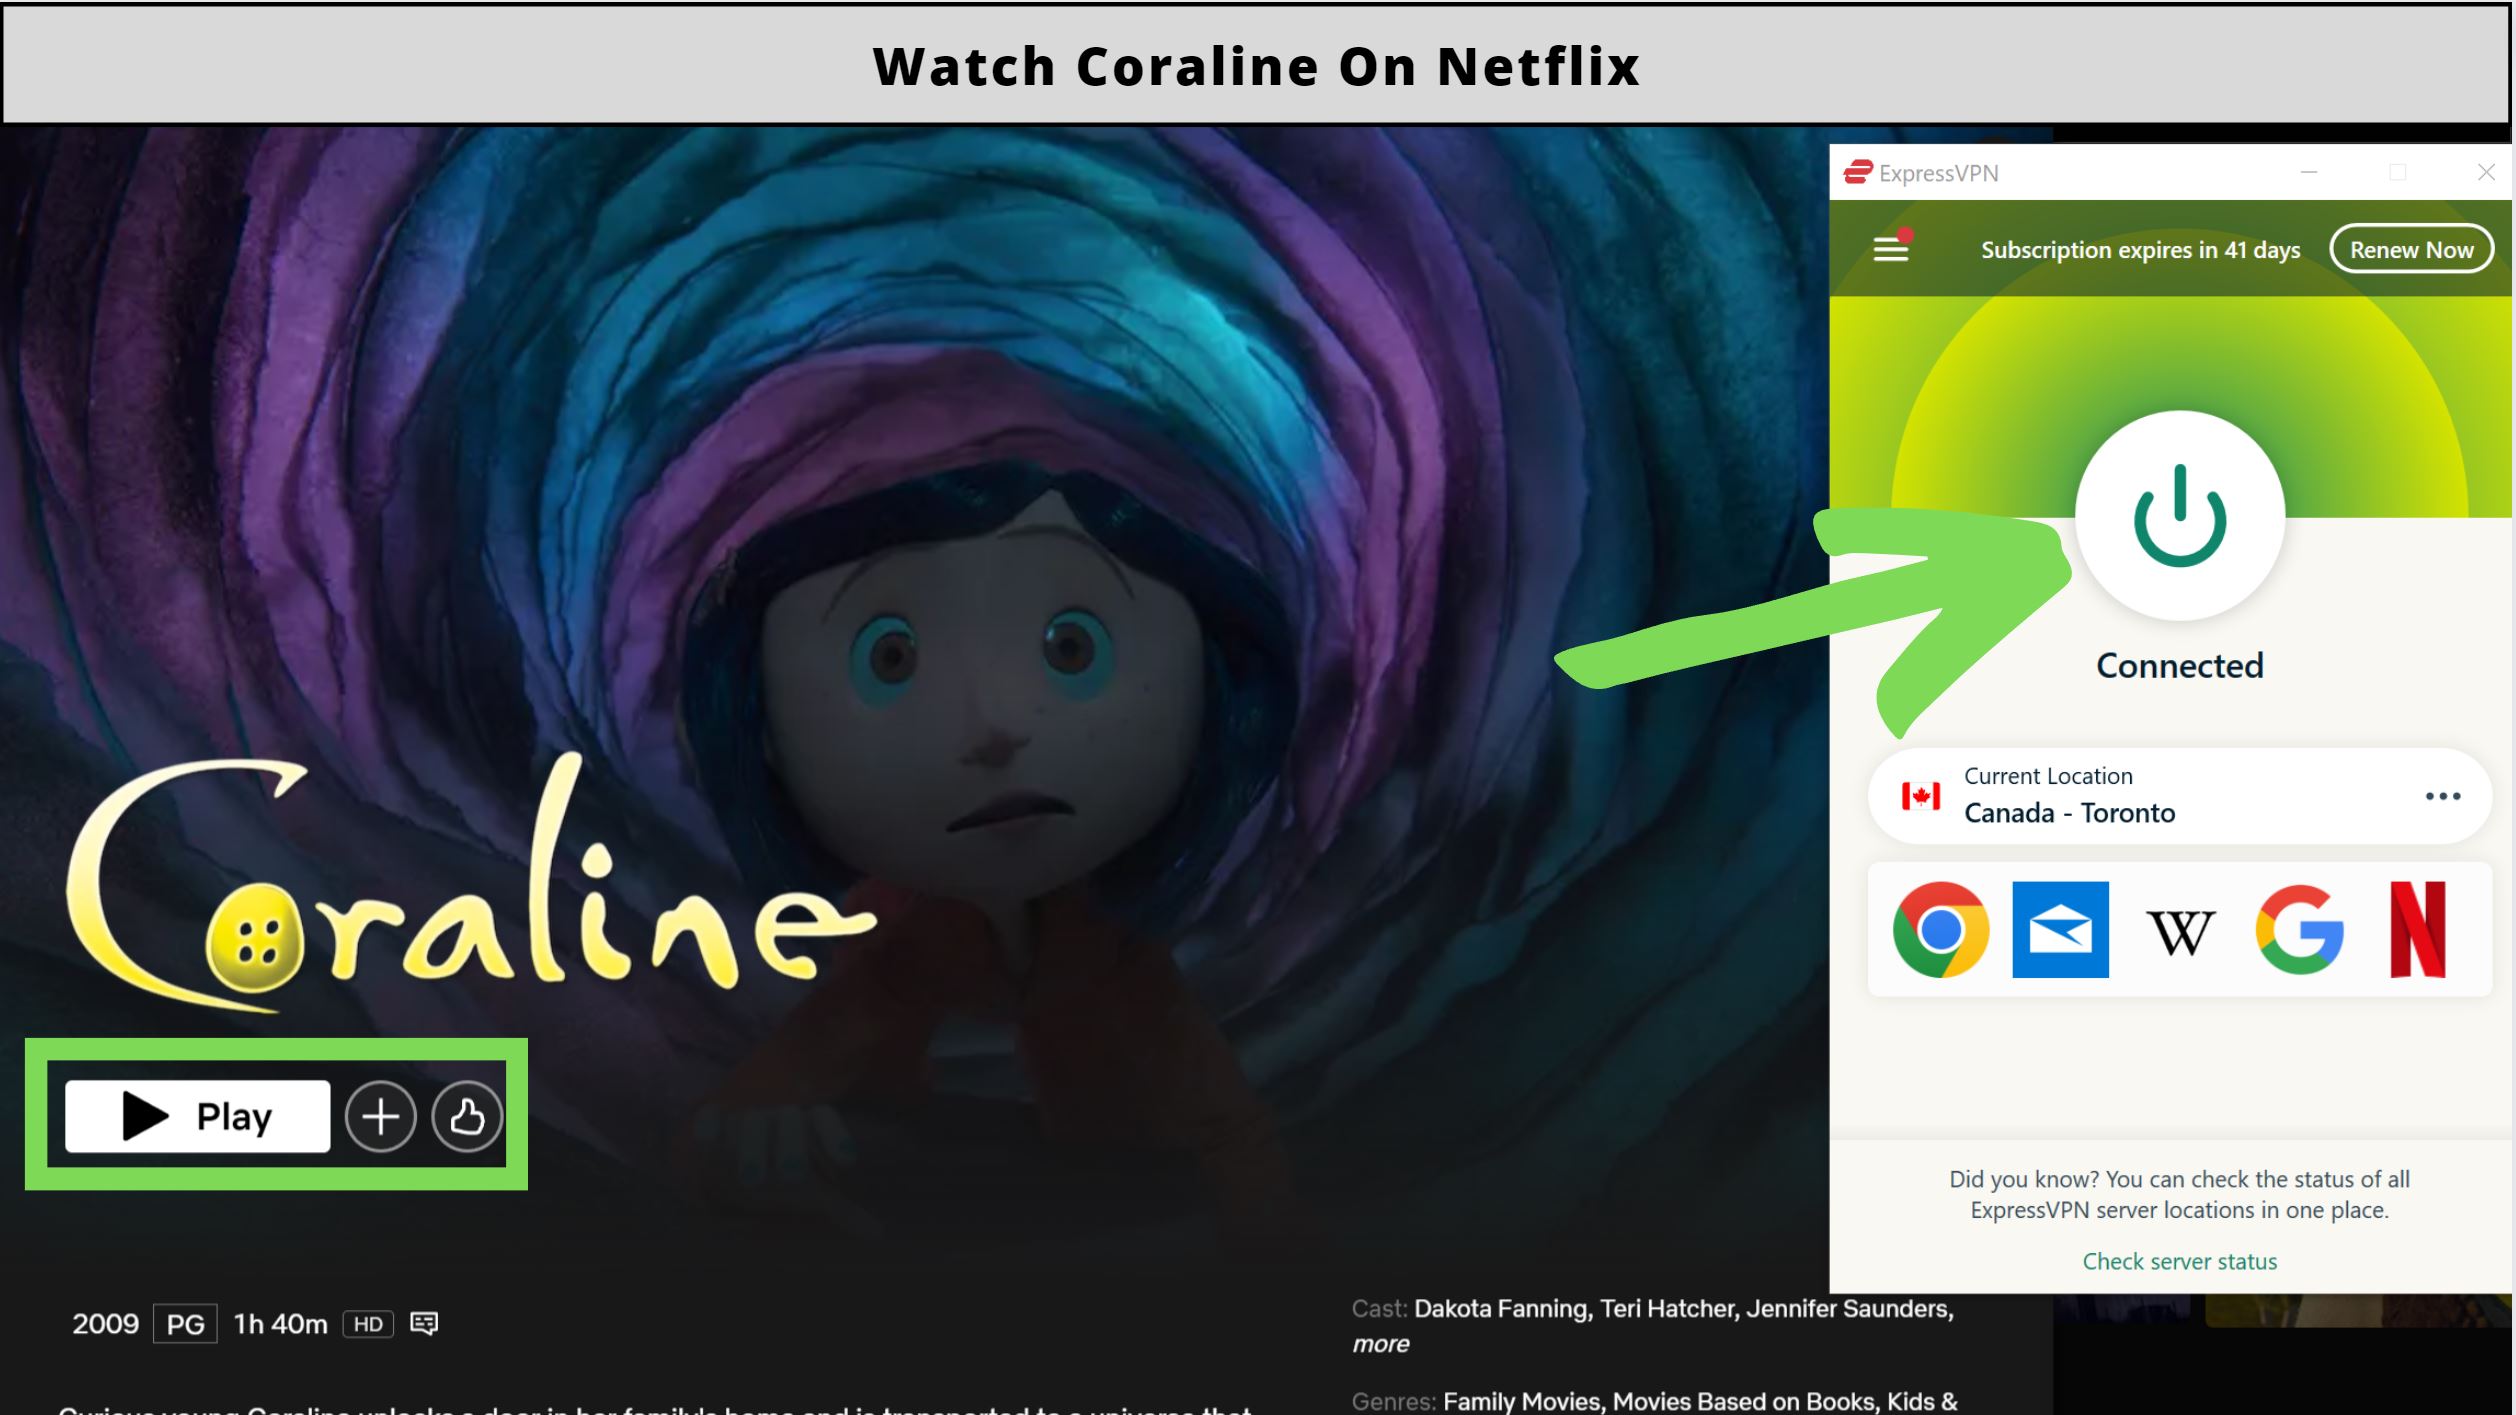 Is Coraline On Netflix? How To Watch Coraline On Netflix